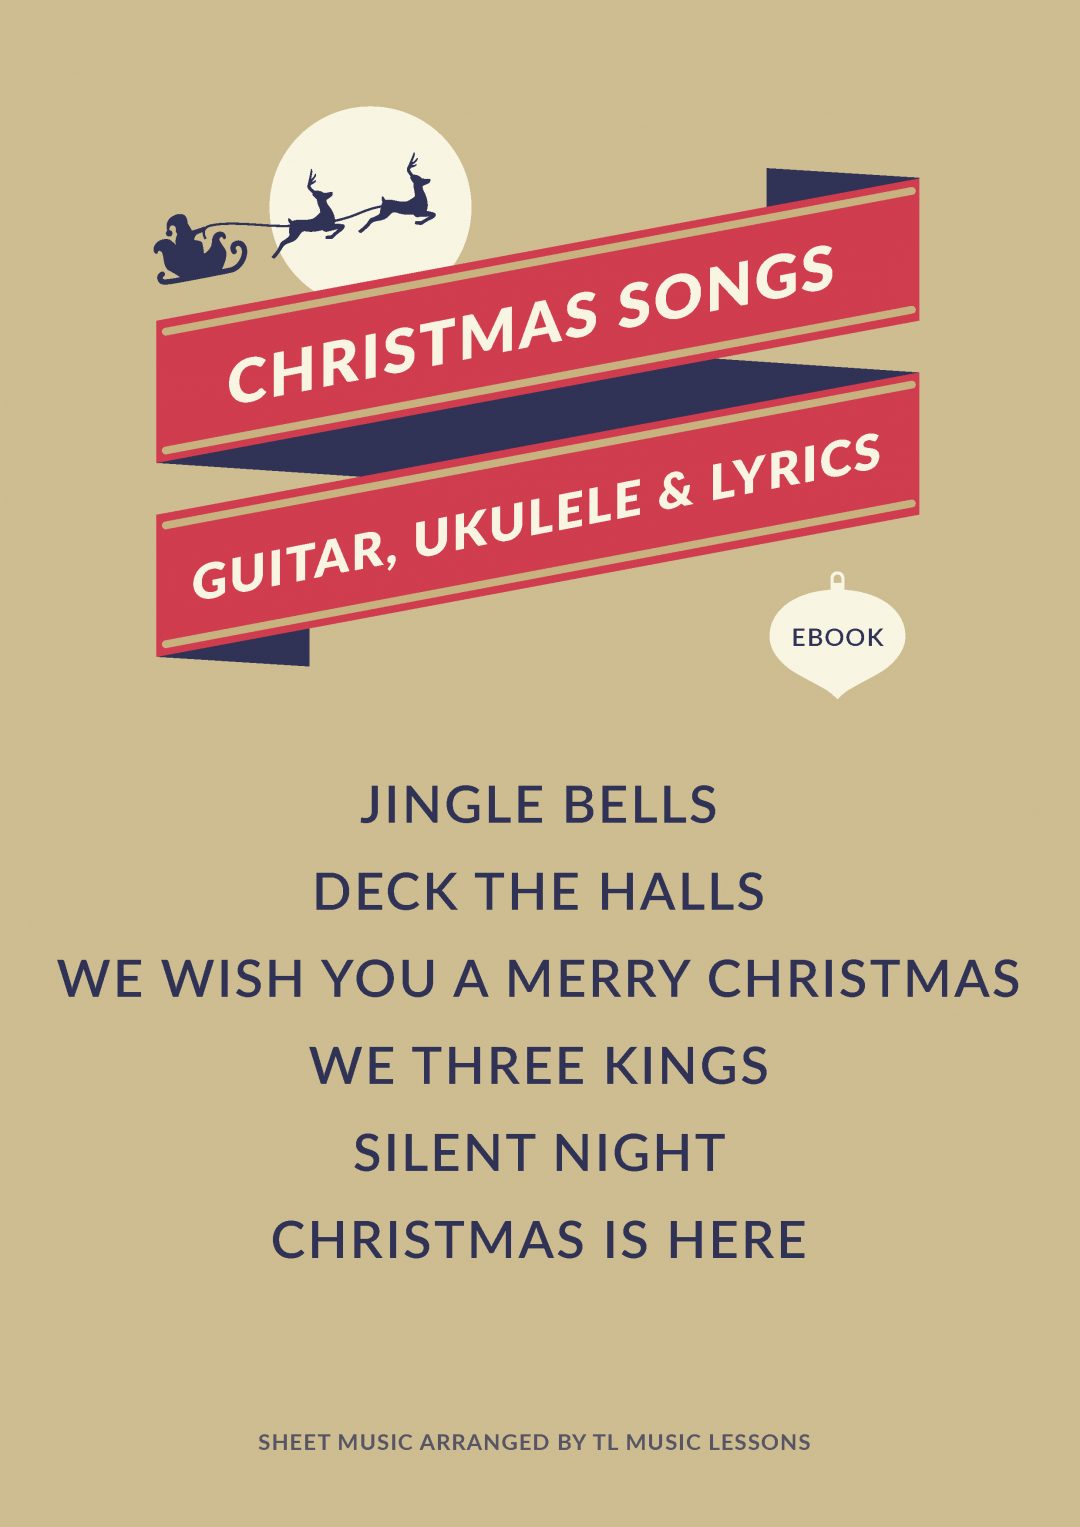 (PREMIUM) – Christmas Songs Ebook – Guitar, Ukulele and Lyrics